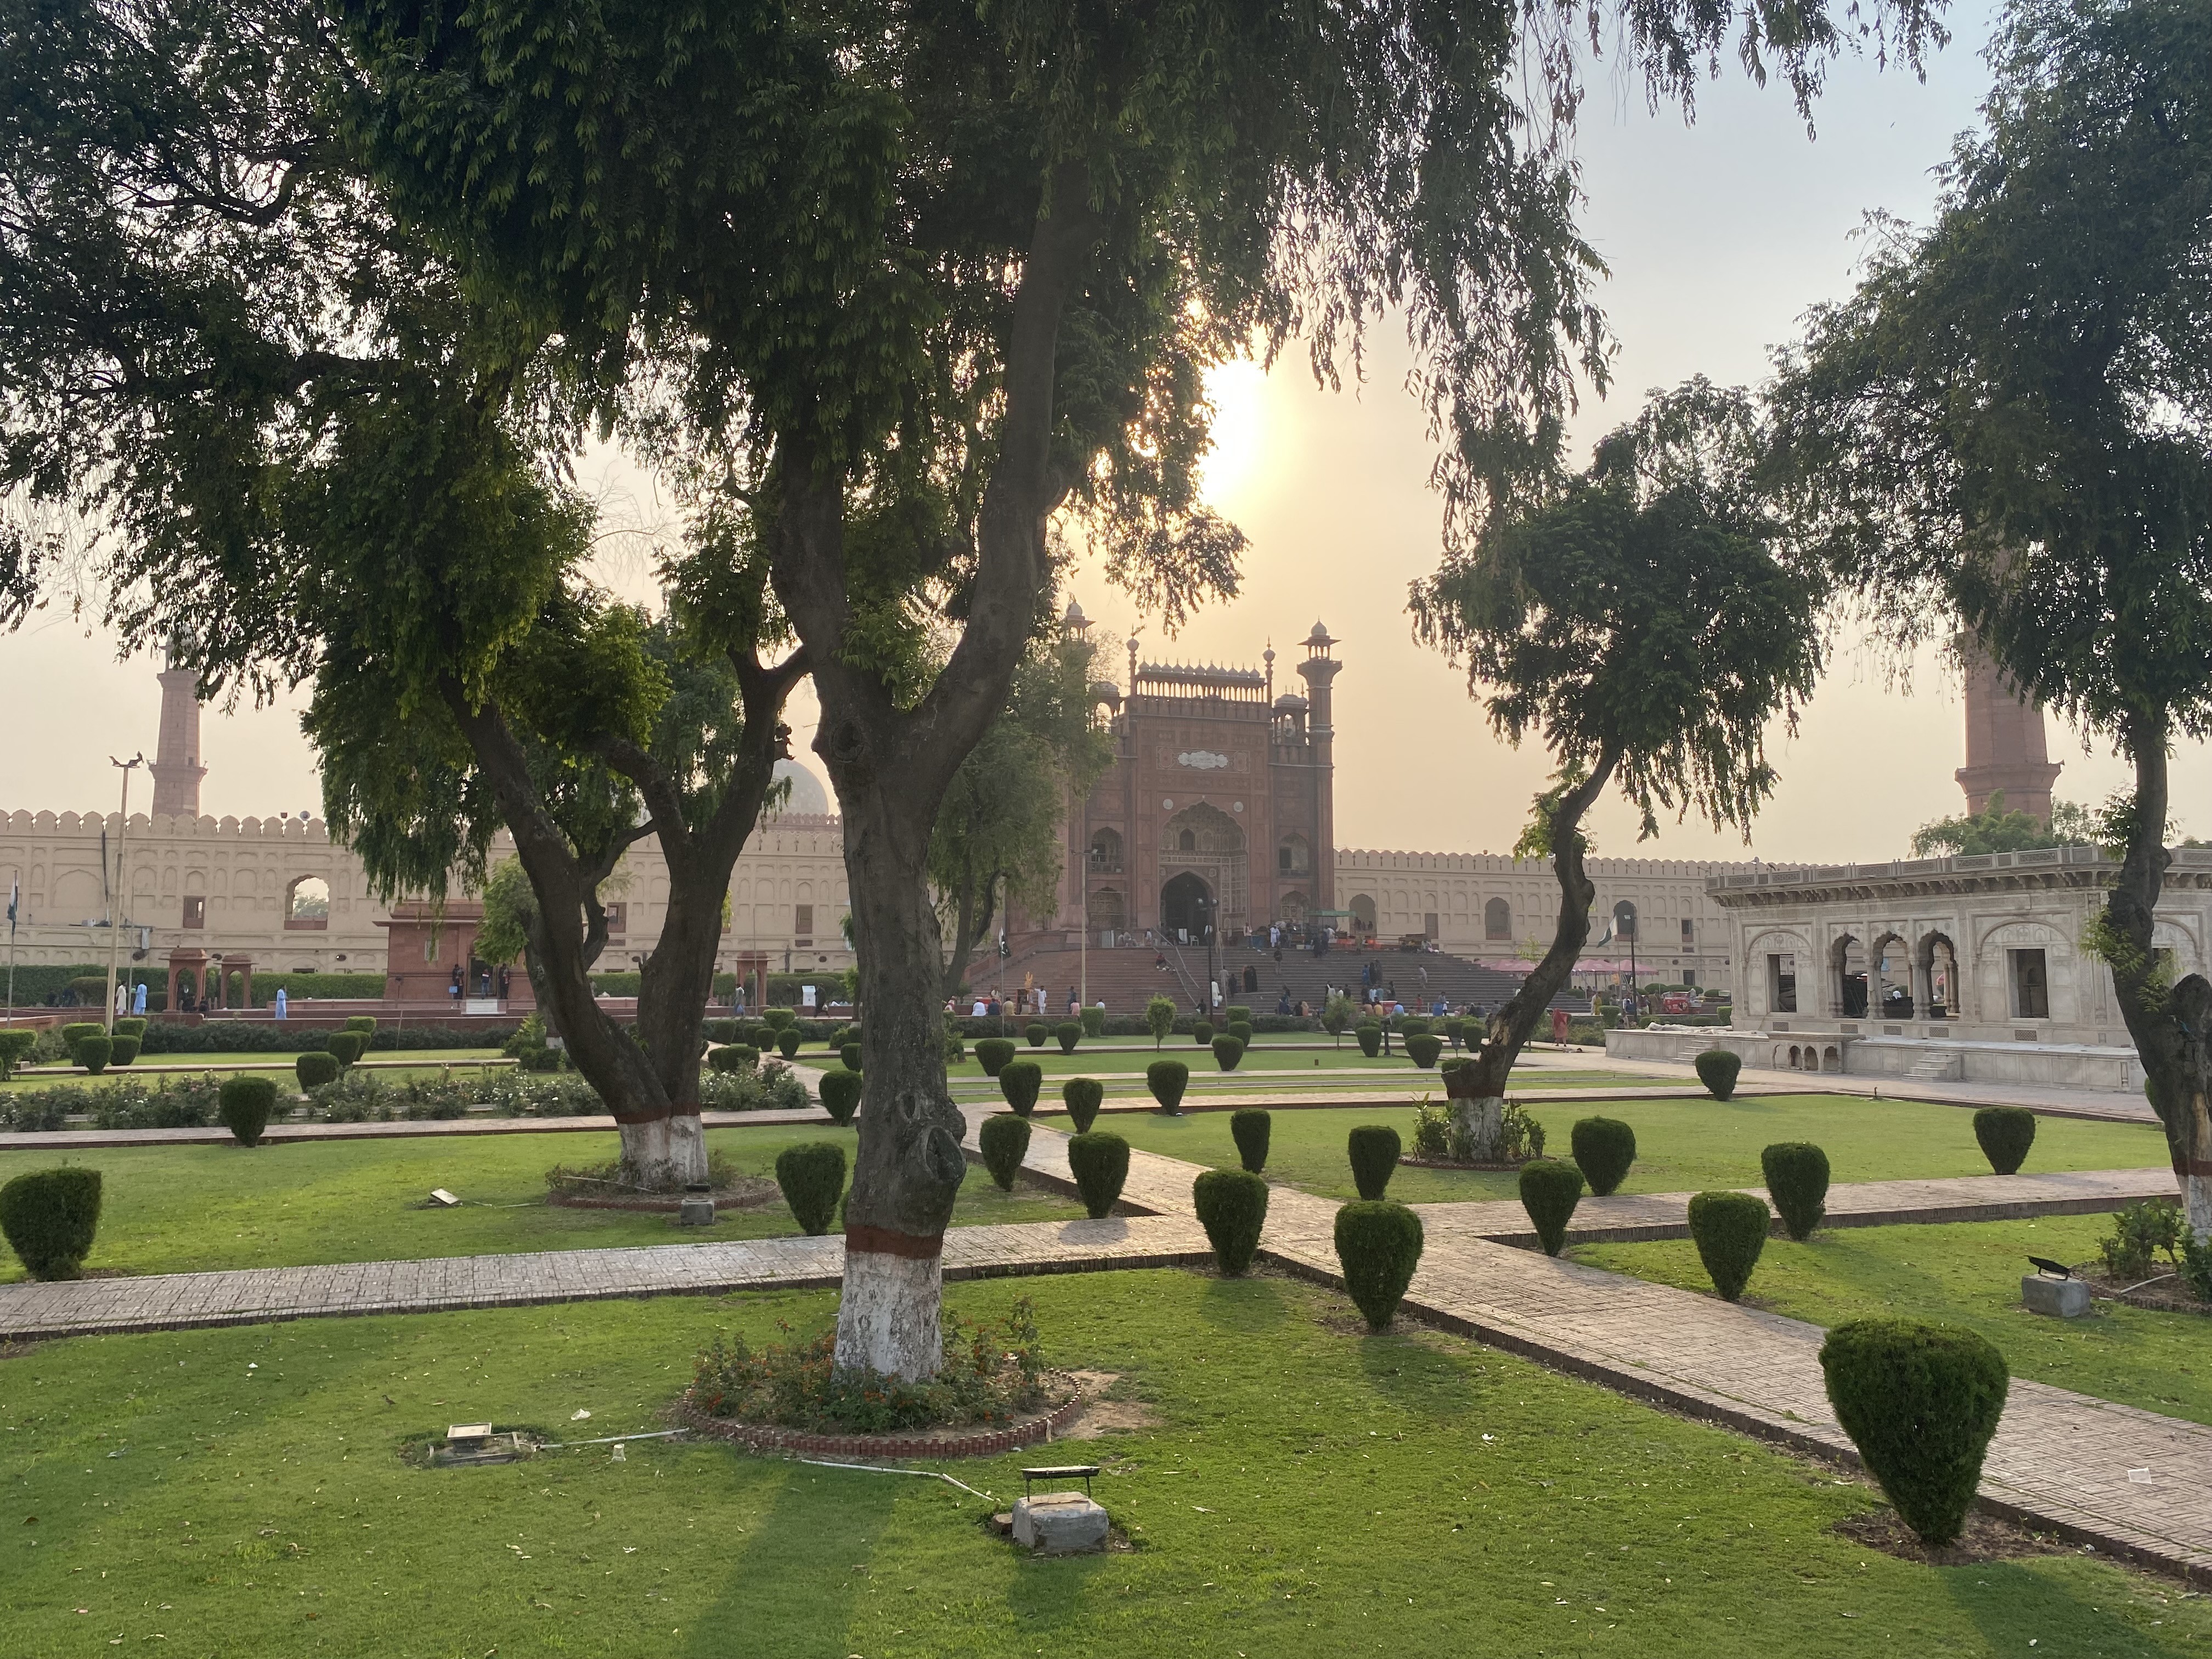 The beautiful view of tomb of Allama Muhammad Iqbal